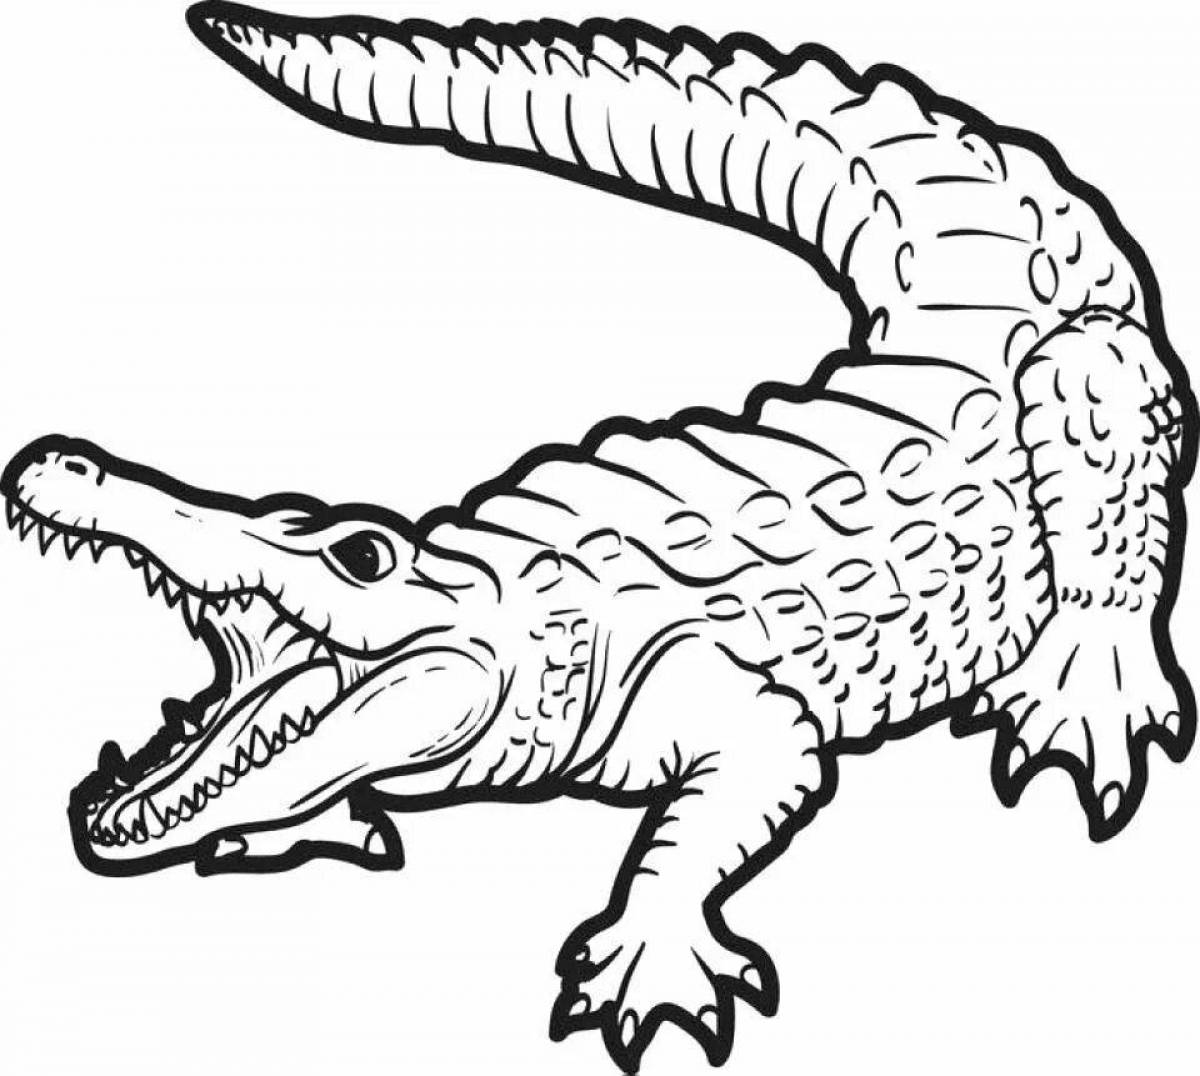 Crocodile drawing for kids #20